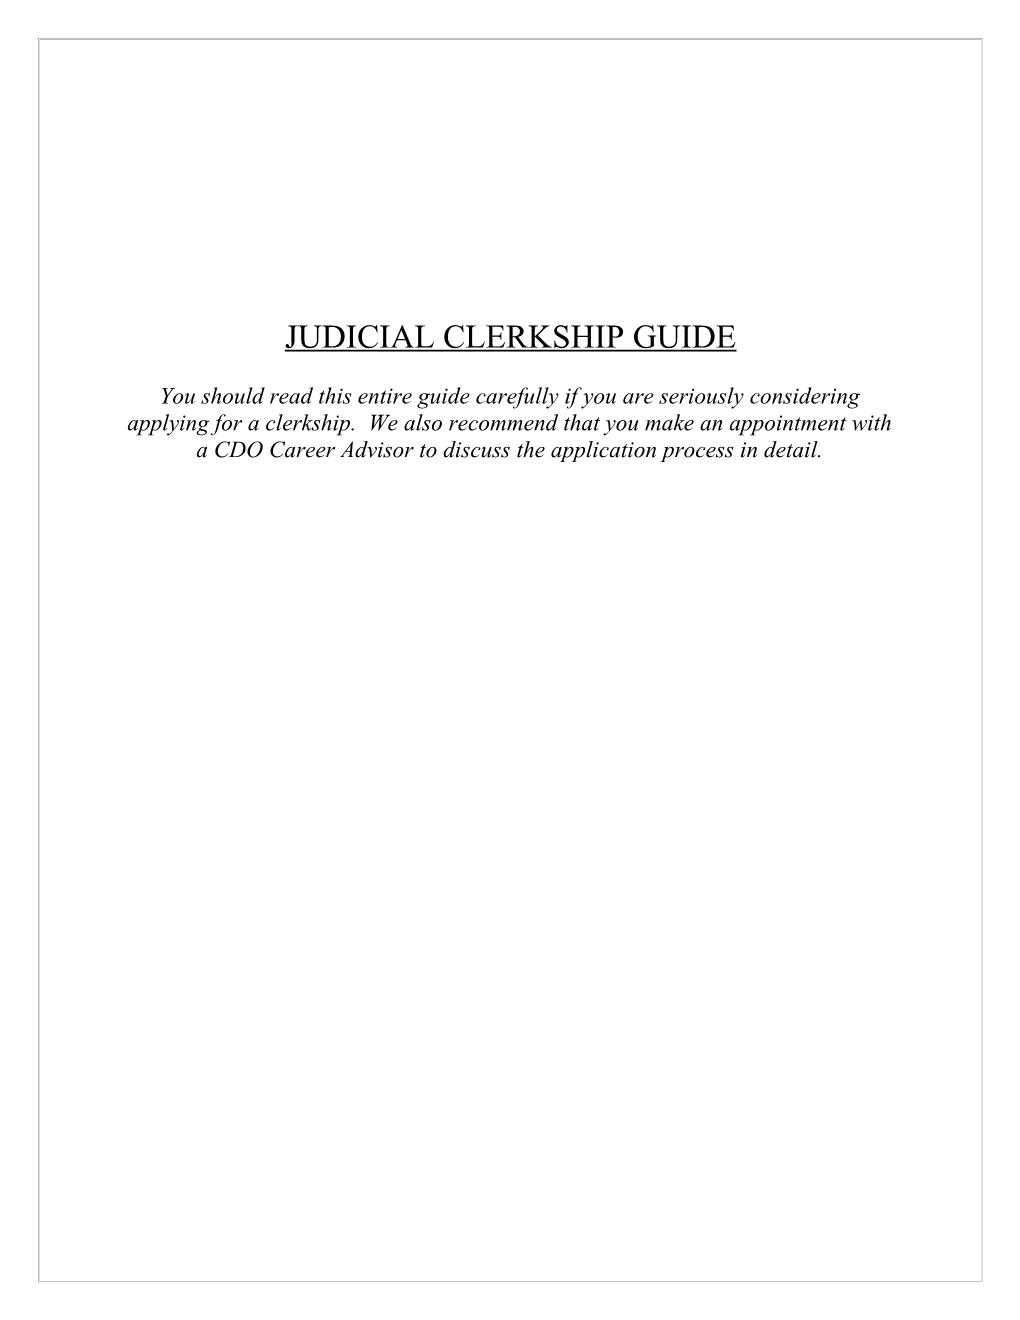 Judicial Clerkship Guide